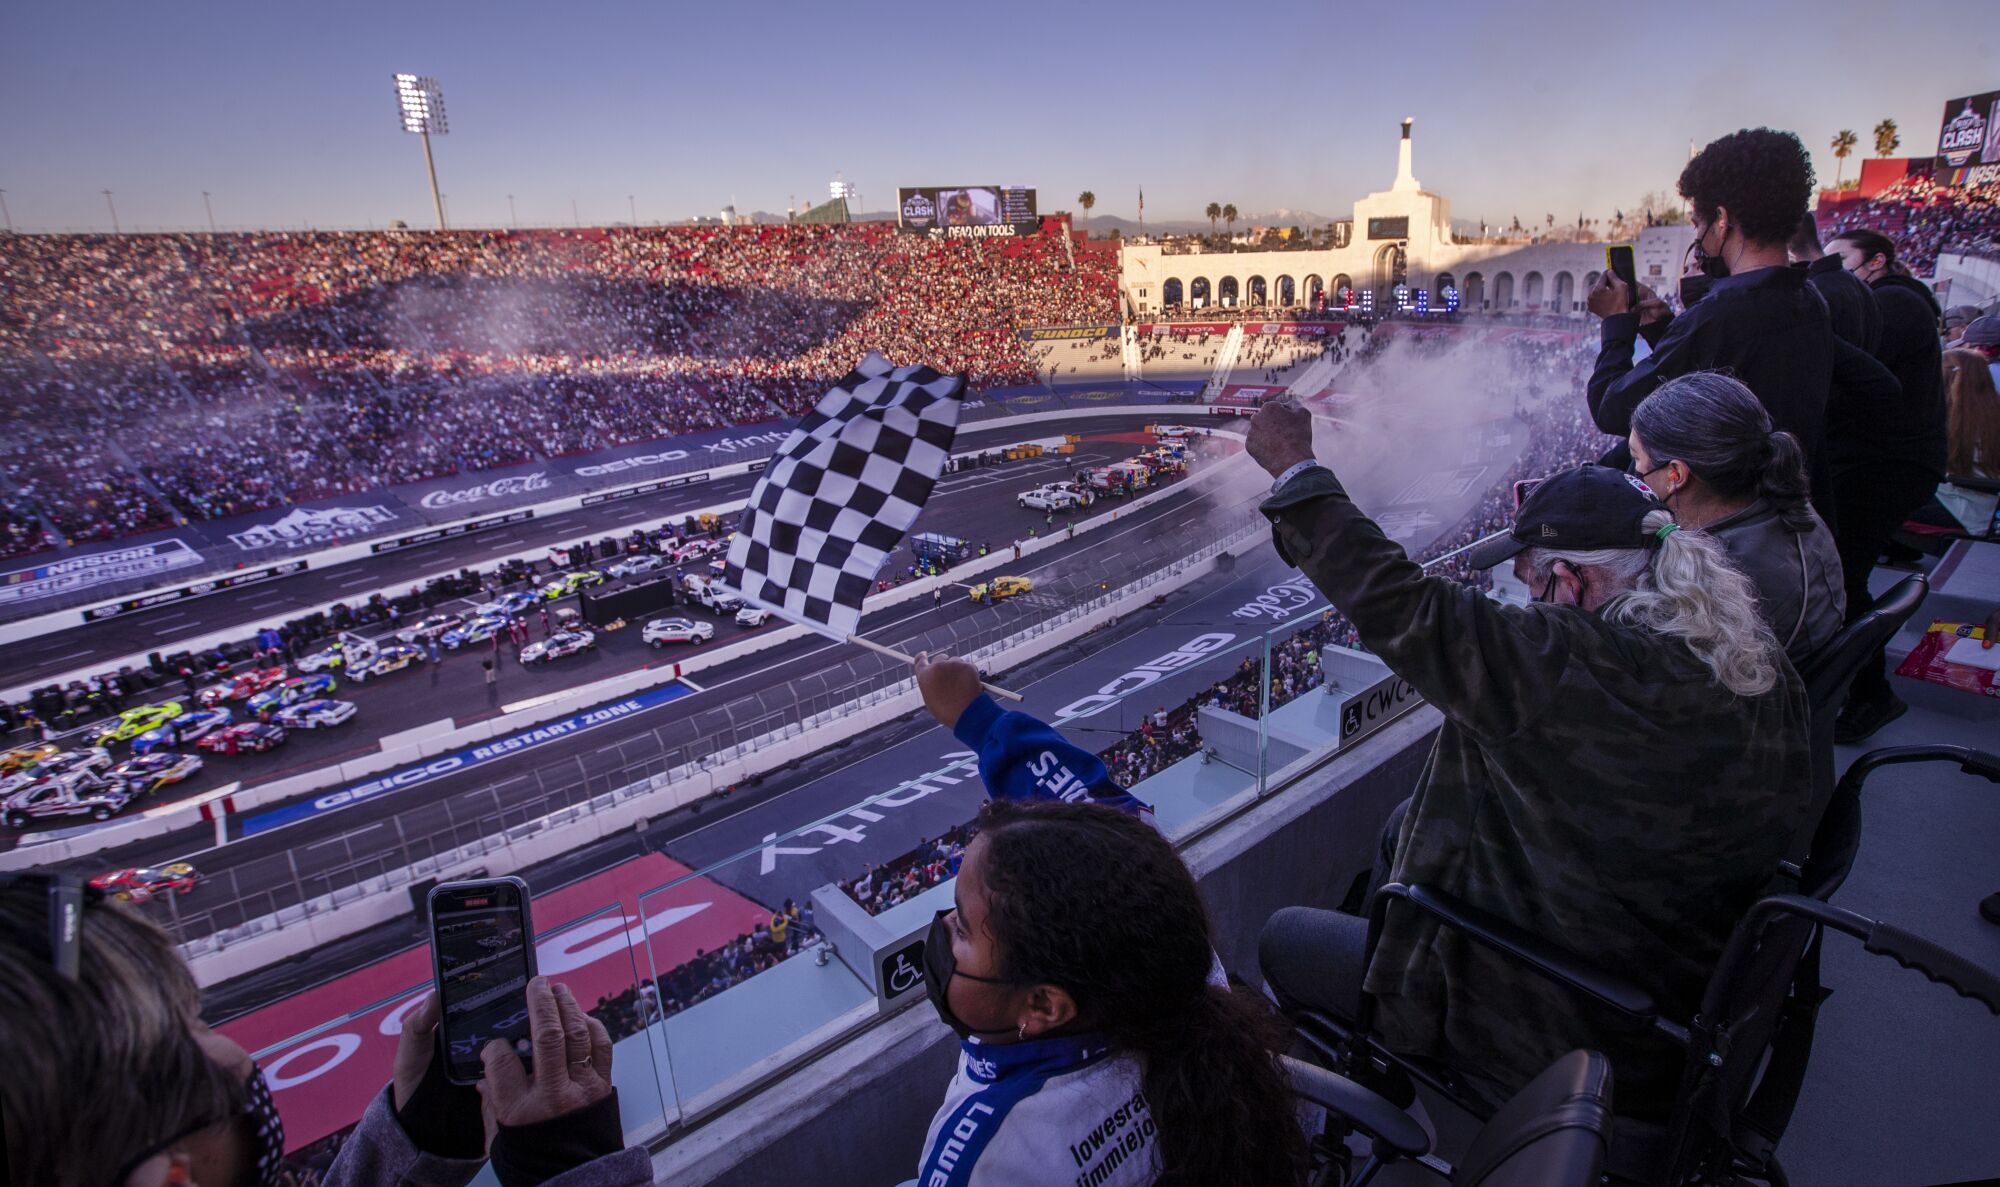 Amaya DiBella as NASCAR driver Joey Logano, #22, does a celebratory burn-out victory lap